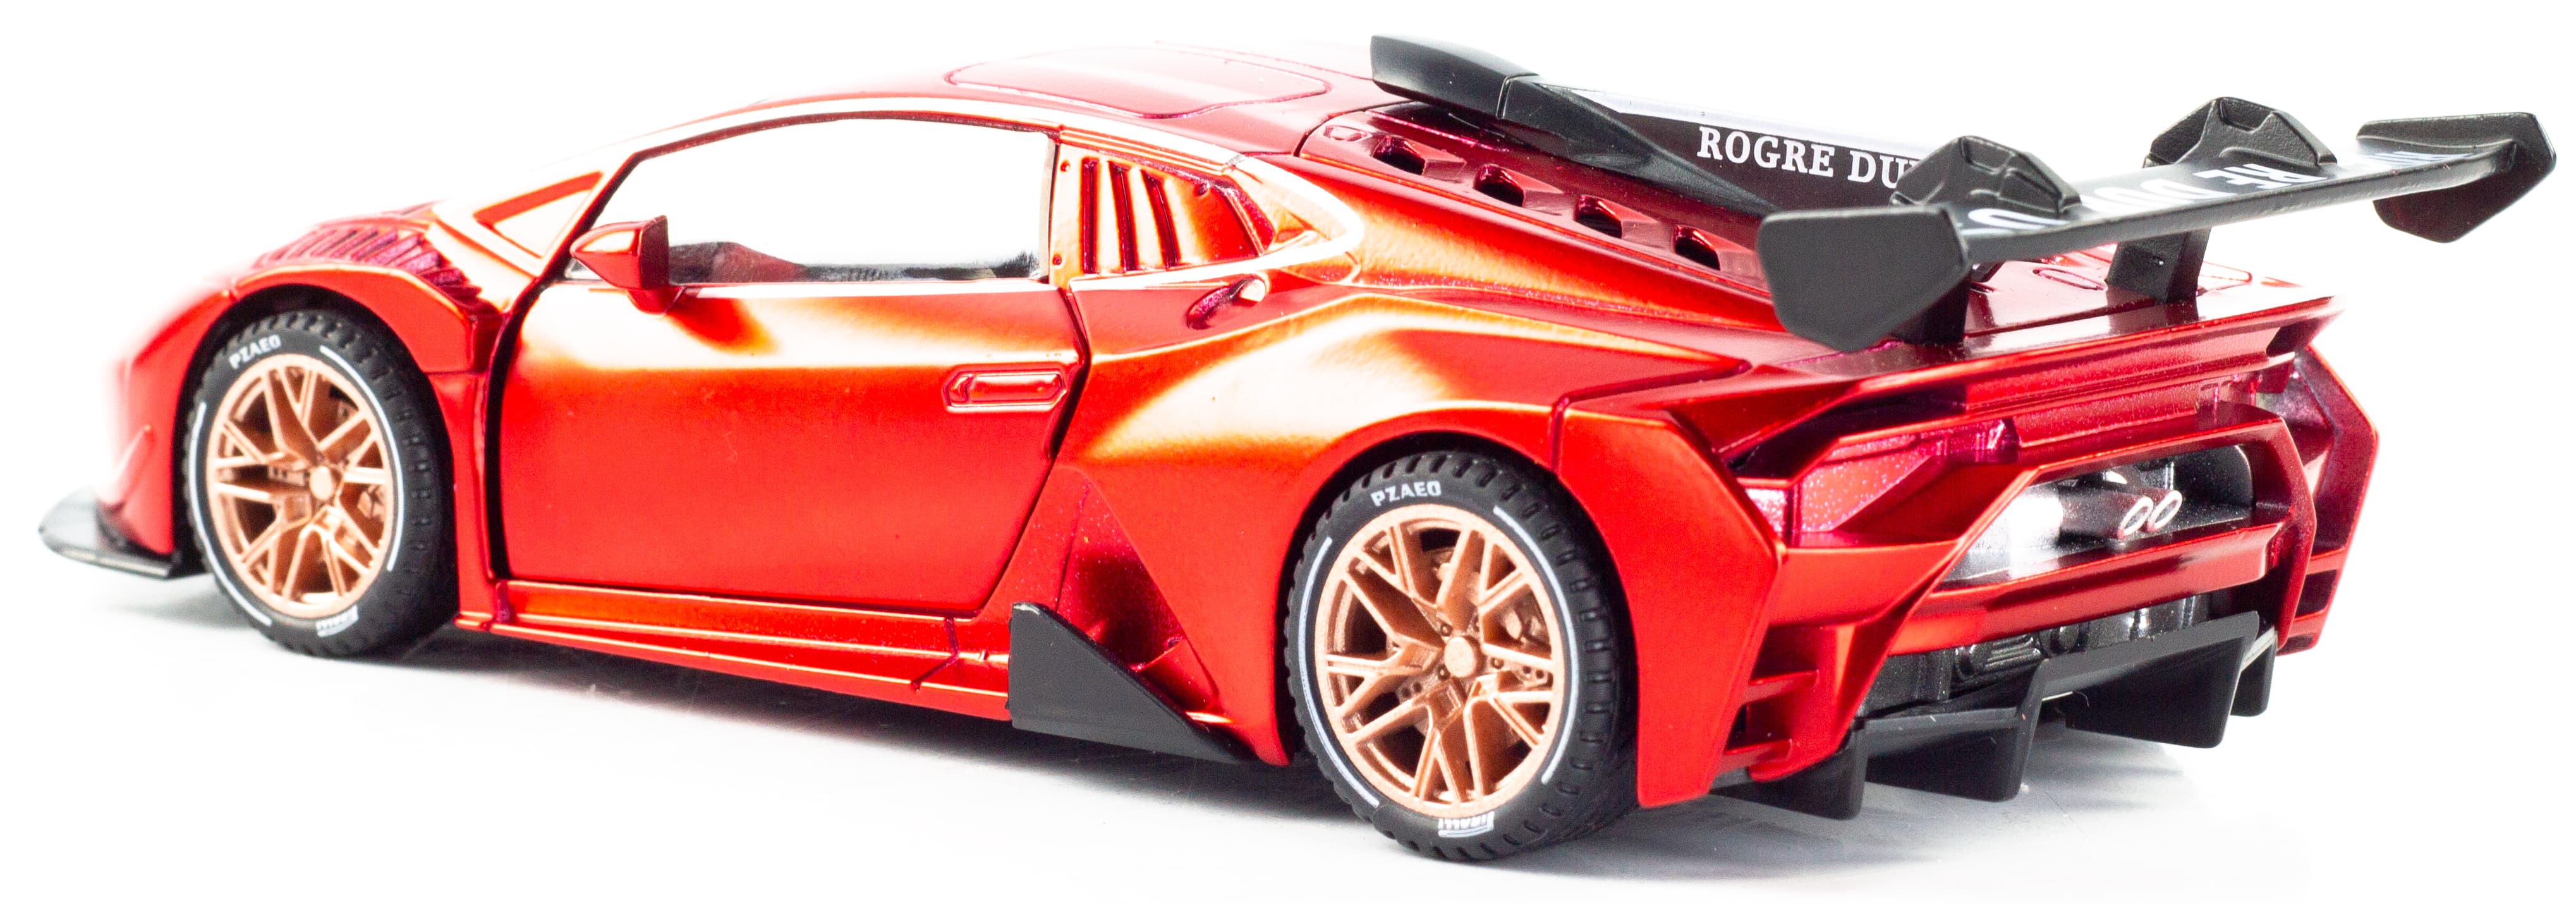 Металлическая машинка ChiMei Model 1:32 «Lamborghini Huracan ST EVO» А322 инерционная, свет, звук / Микс